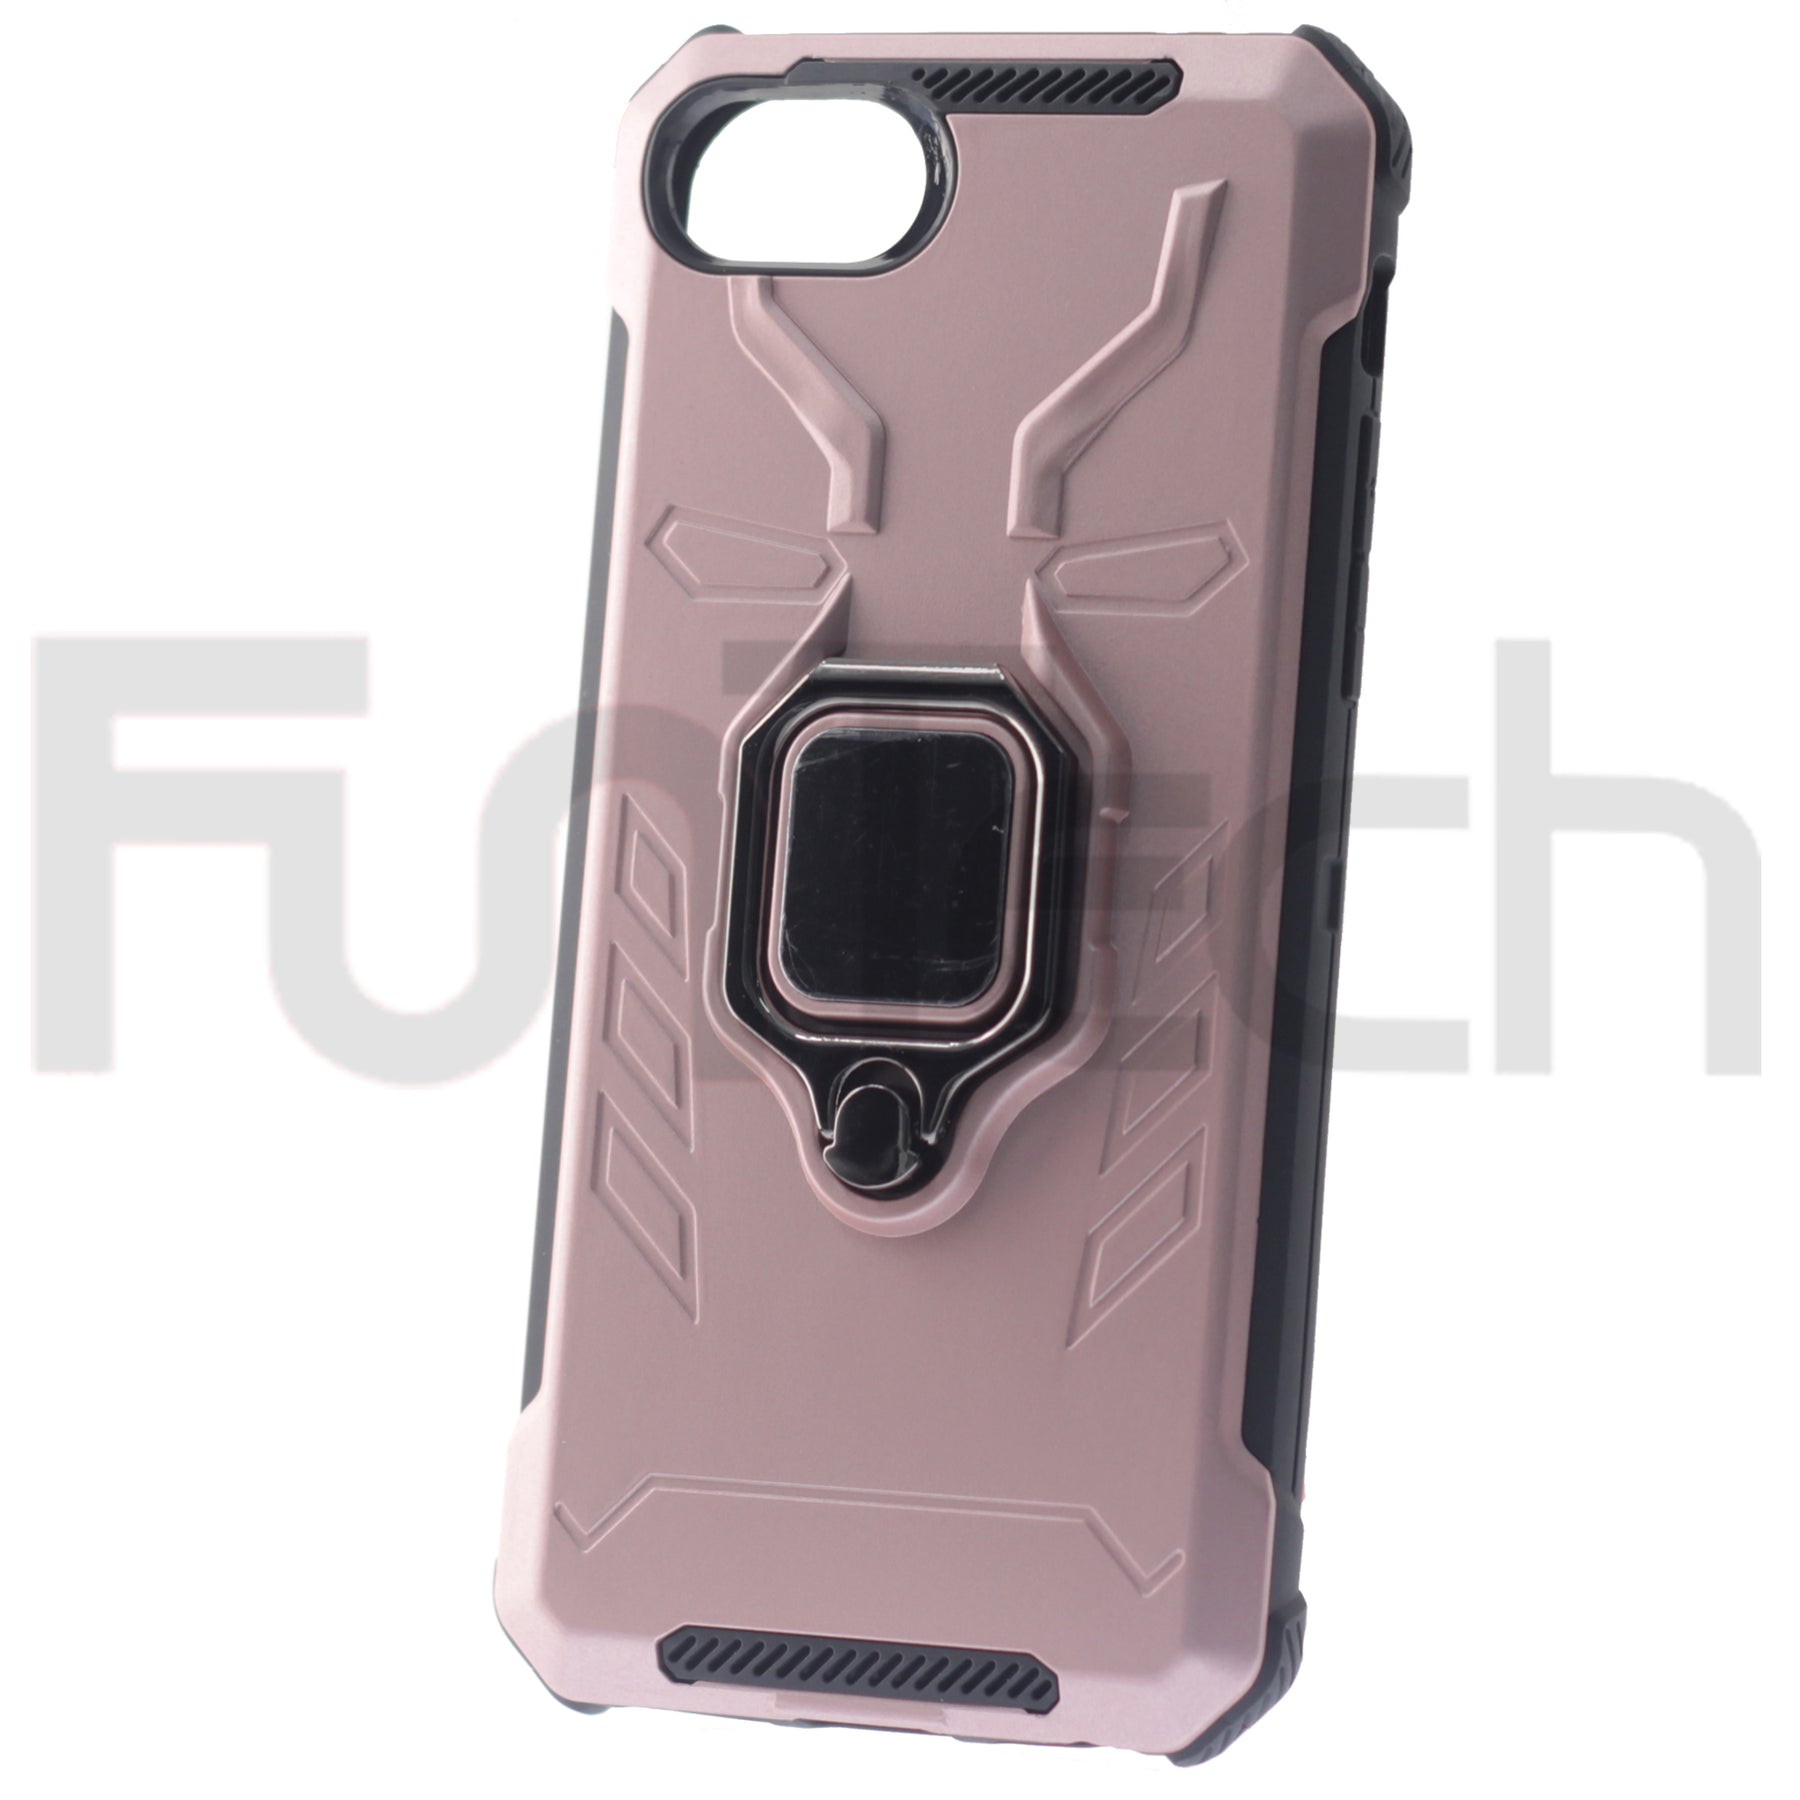 Apple iPhone 6/7/8/SE2020, Phone Case, Color Rose Gold.